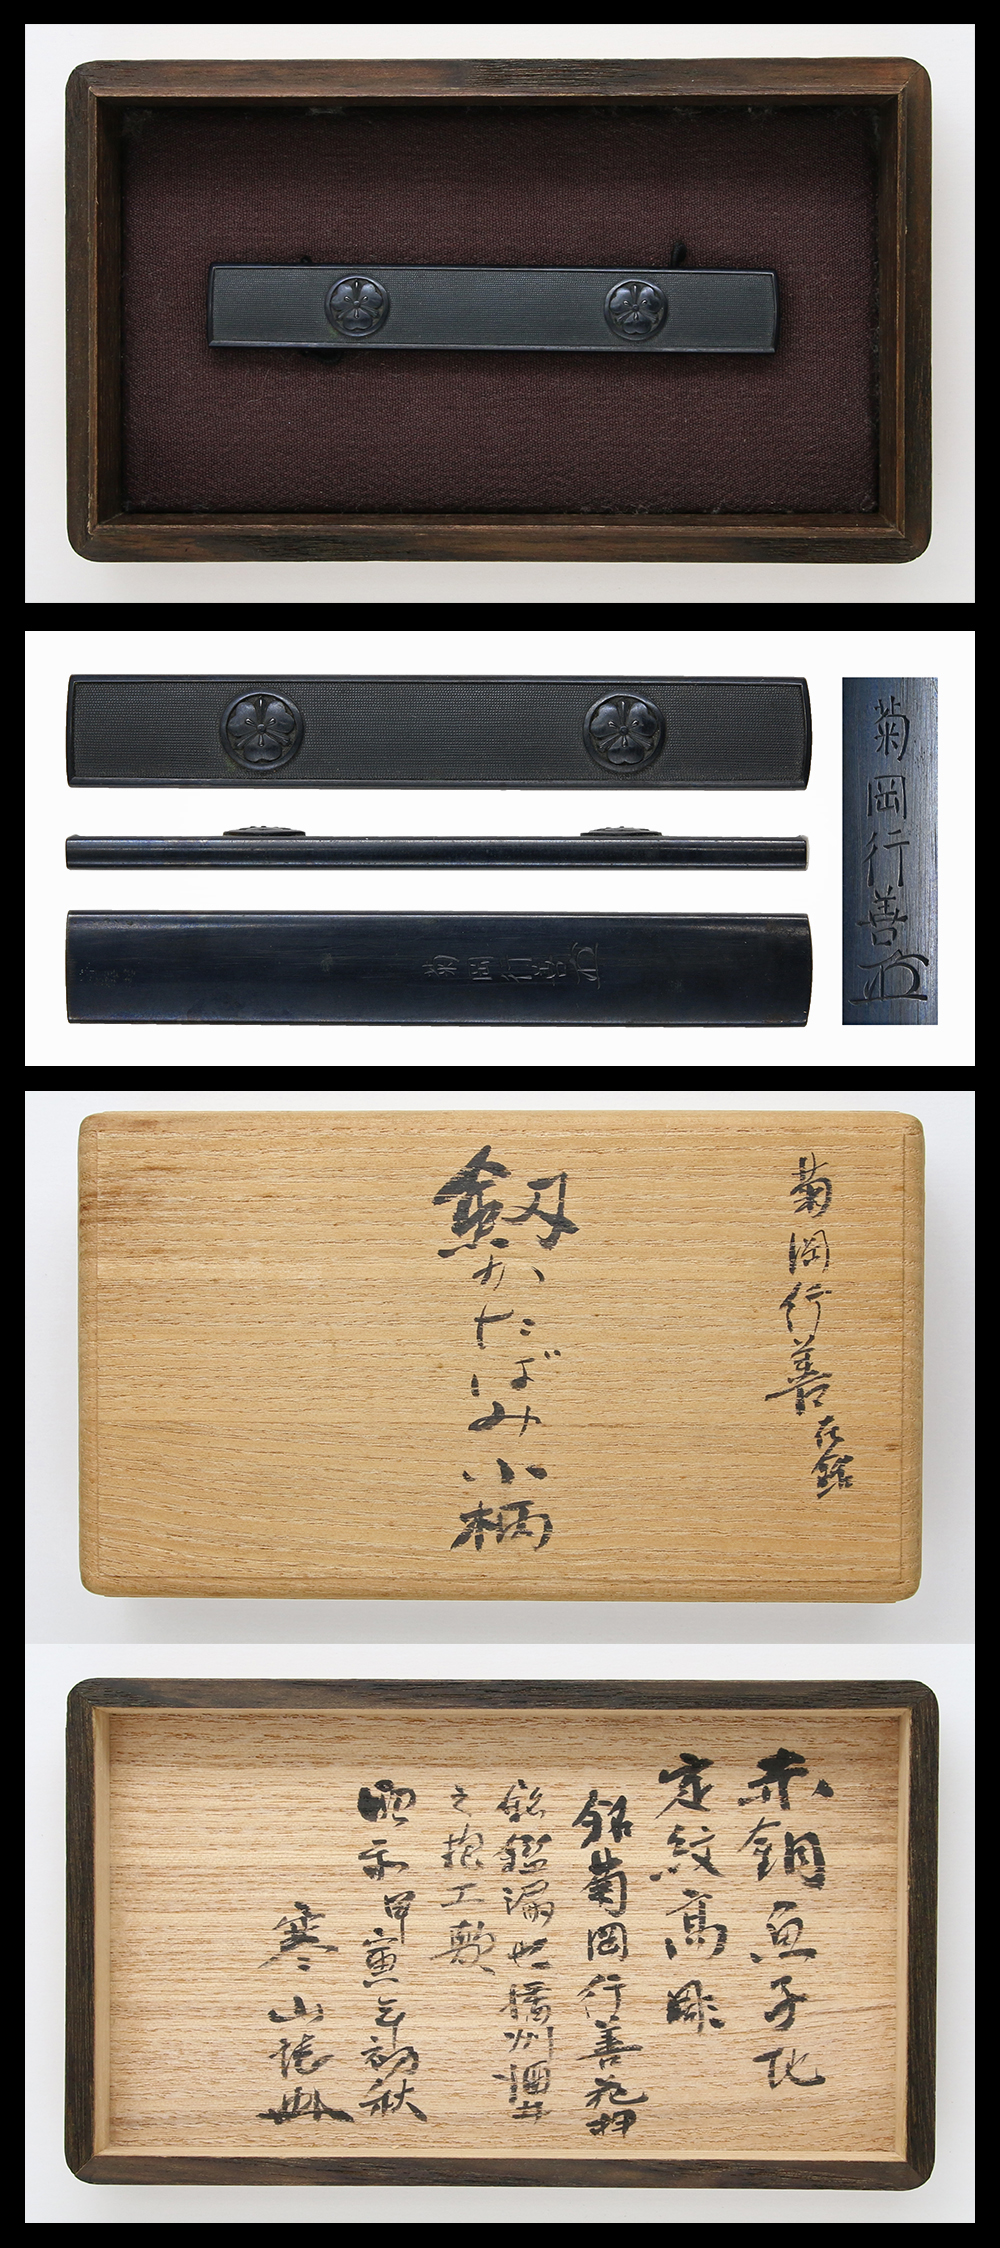 Kozuka : Kikuoka Yukiyoshi (Kao) | Japanese Sword Online Museum